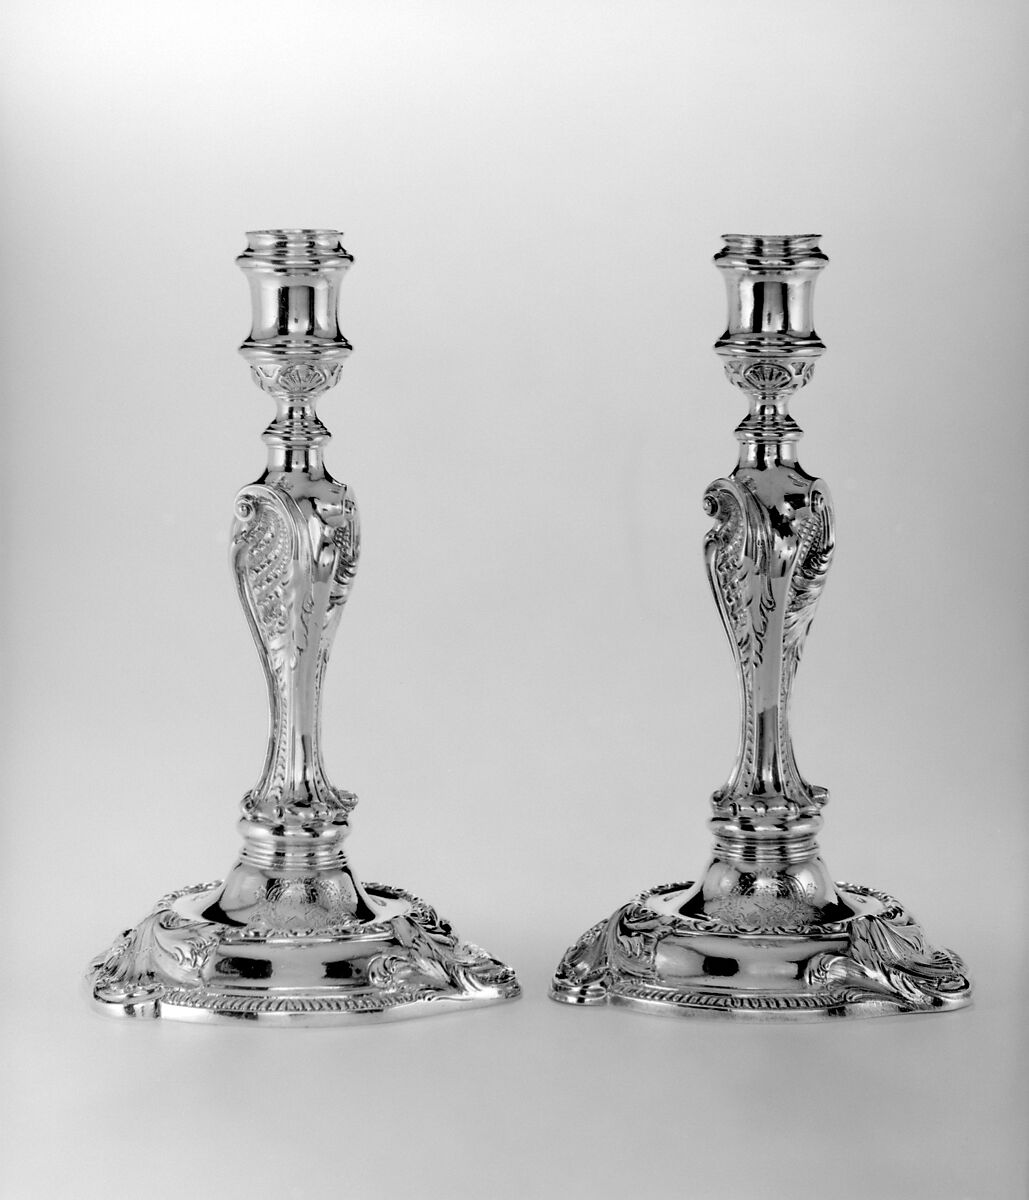 Pair of candlesticks, Thomas Gilpin (active 1730–73), Silver, British, London 